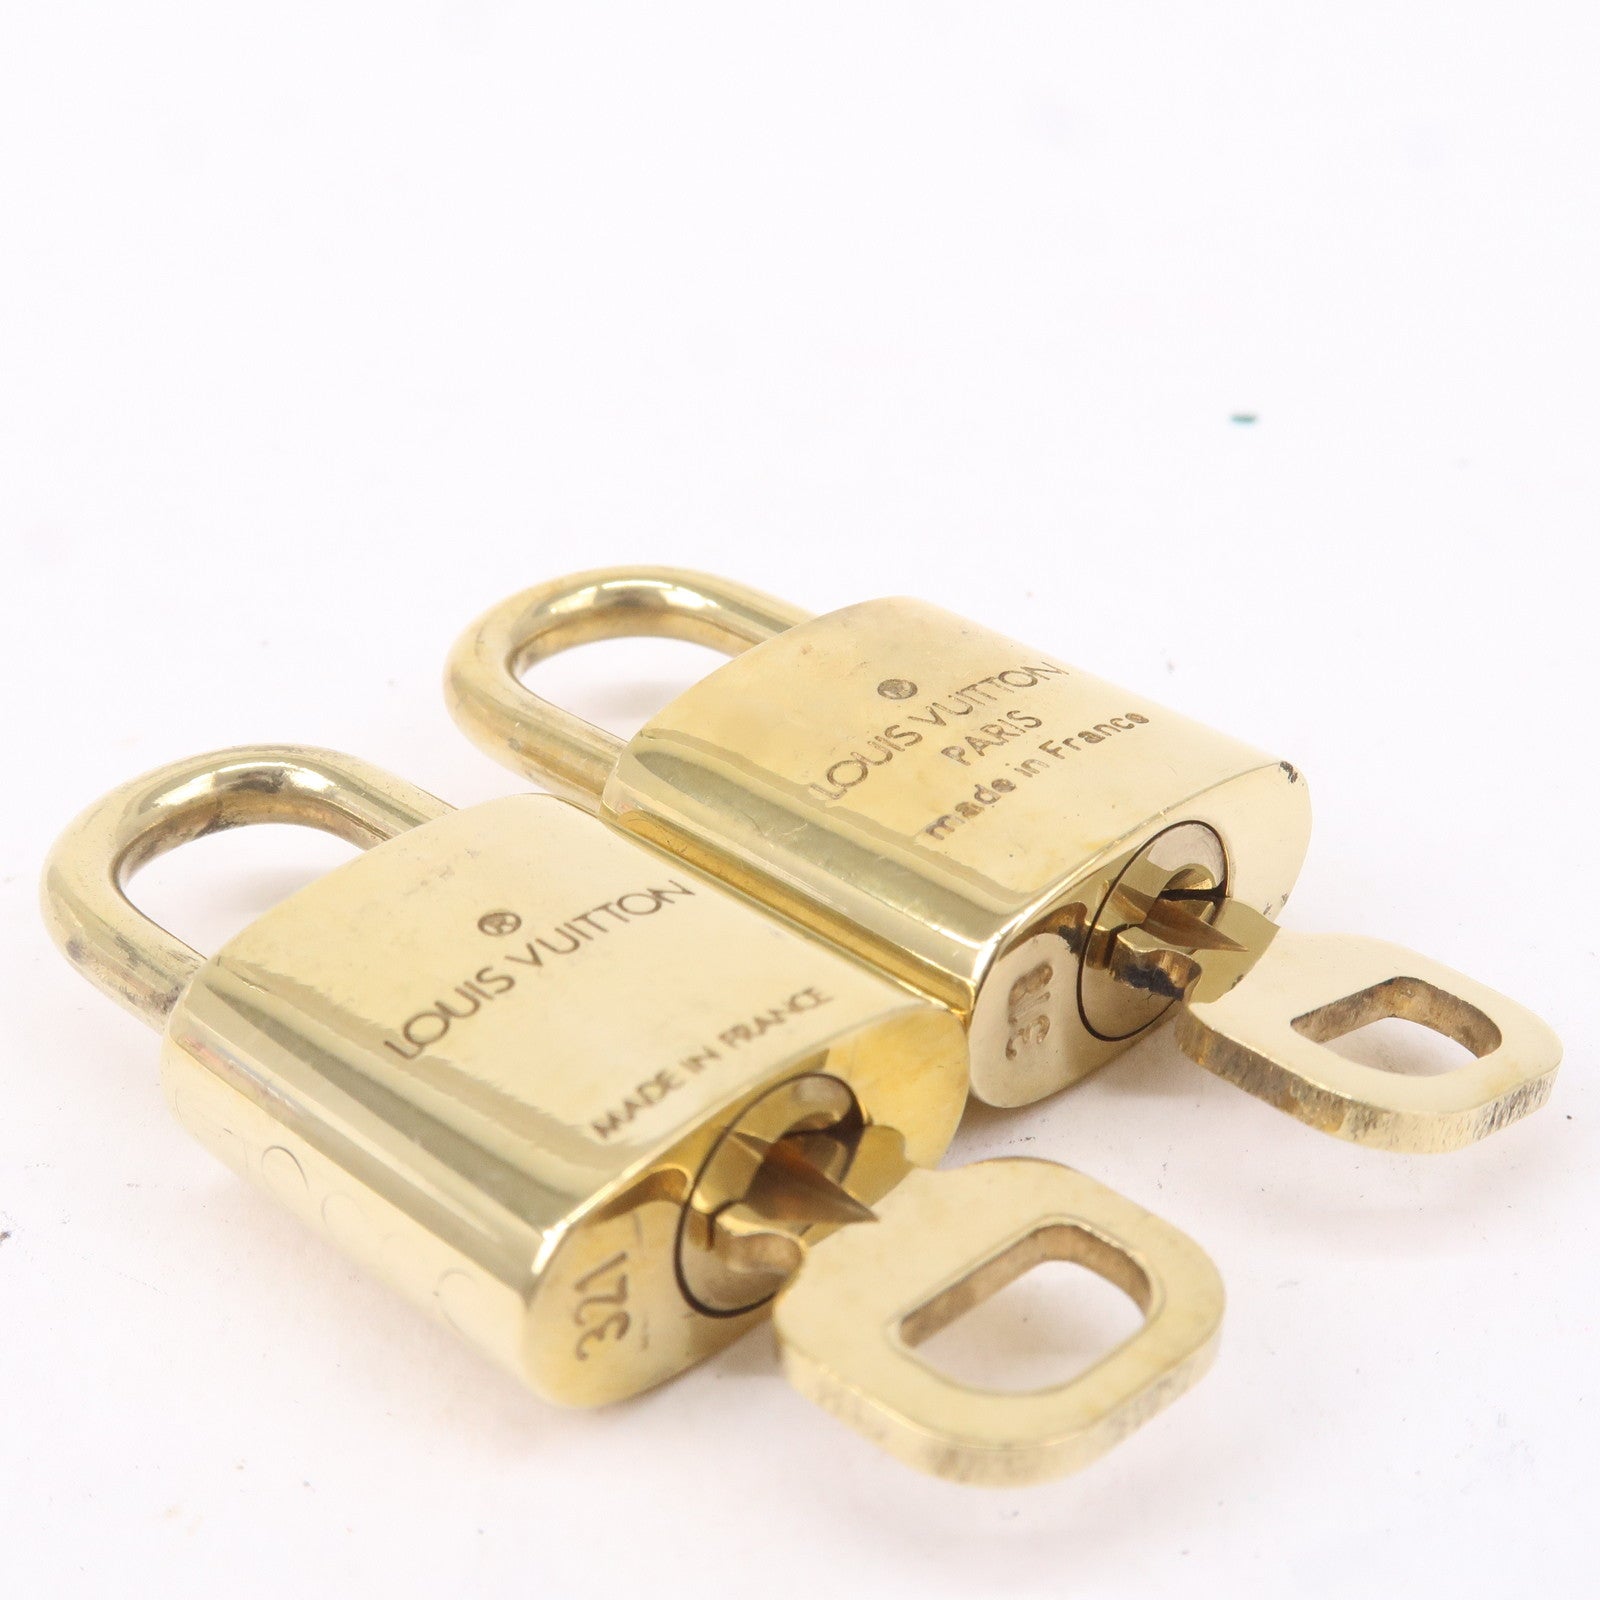 Louis Vuitton Yellow Gold Padlock and Keys Charm Bracelet at